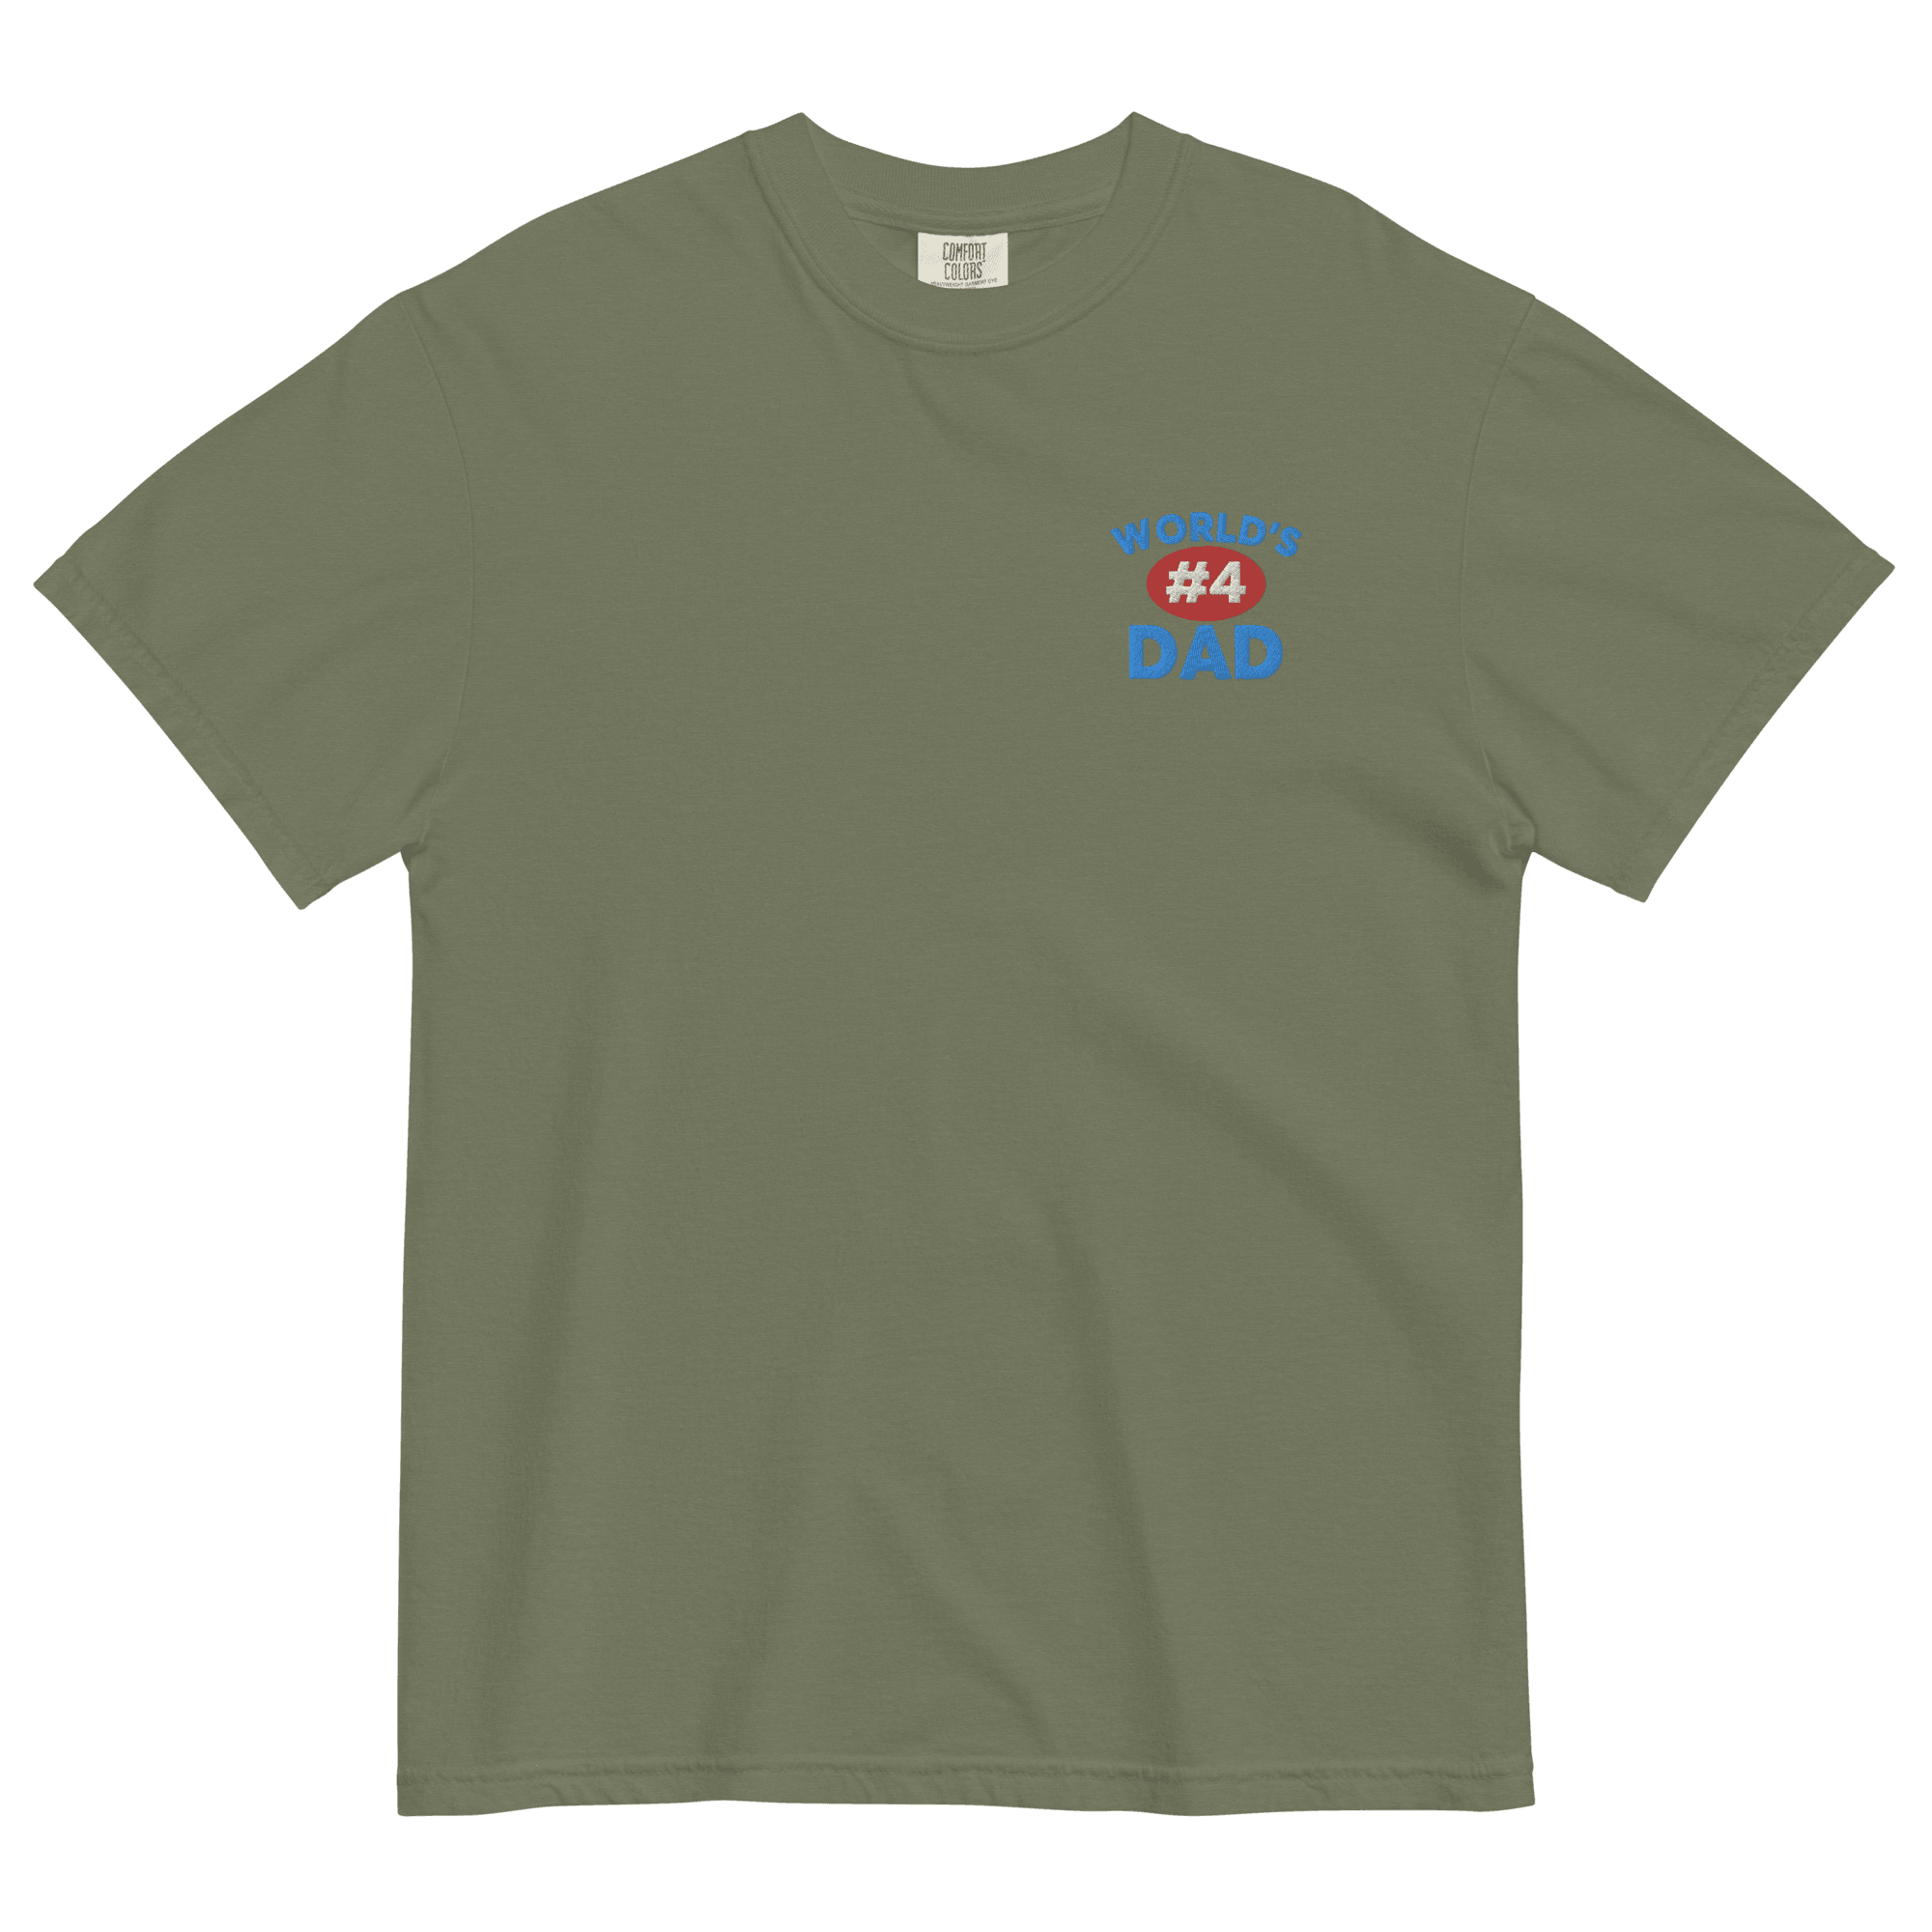 World's #4 Dad Shirt - Polychrome Goods 🍊